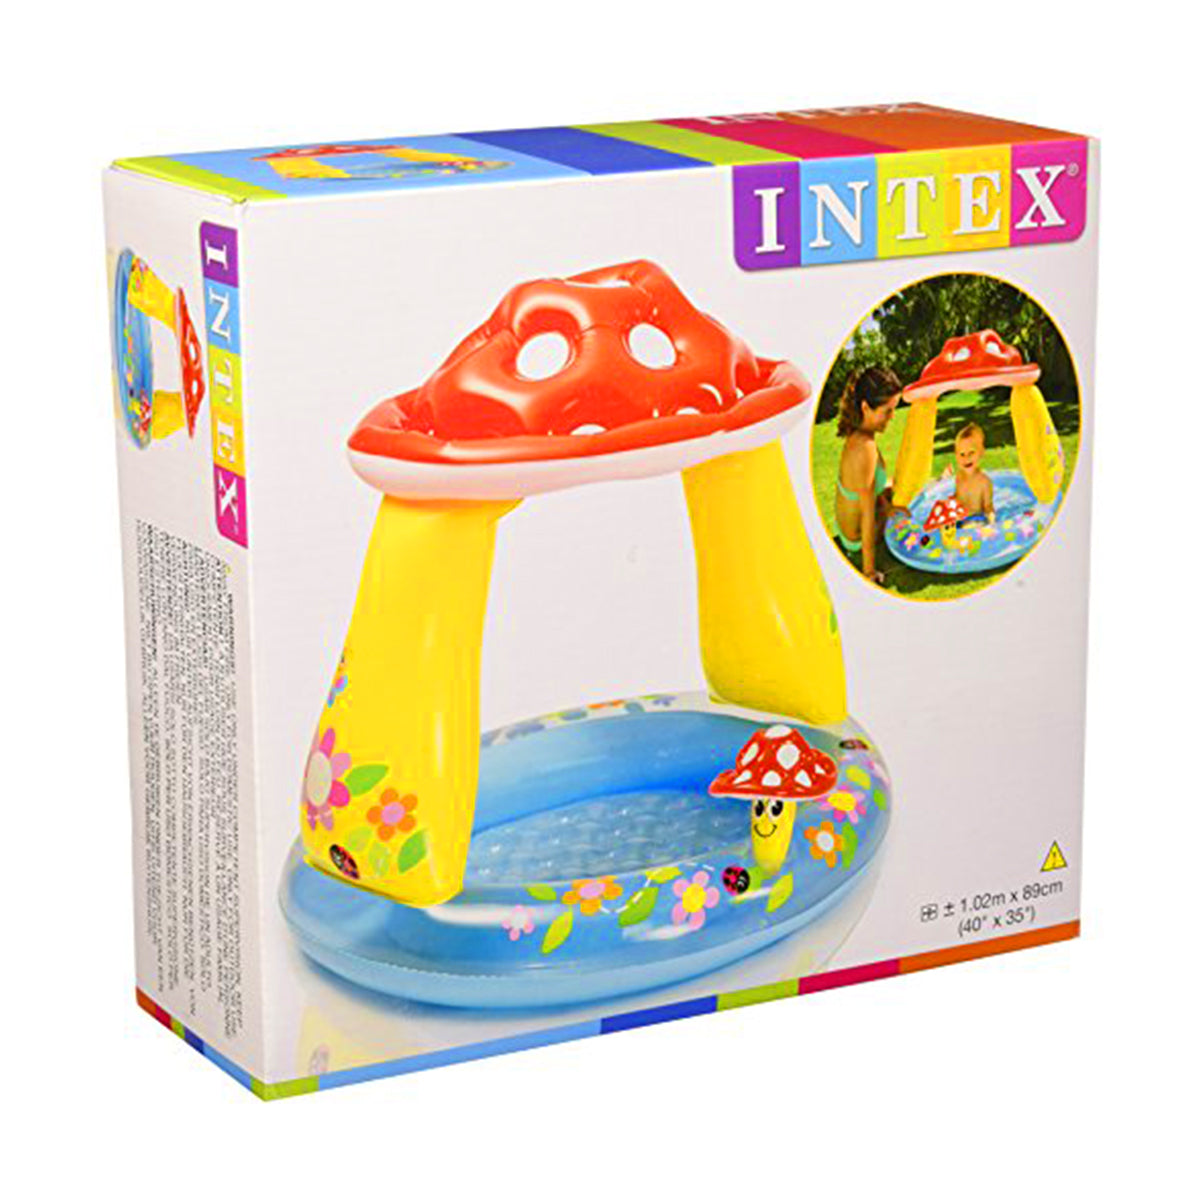 Intex - Mushroom Baby Pool